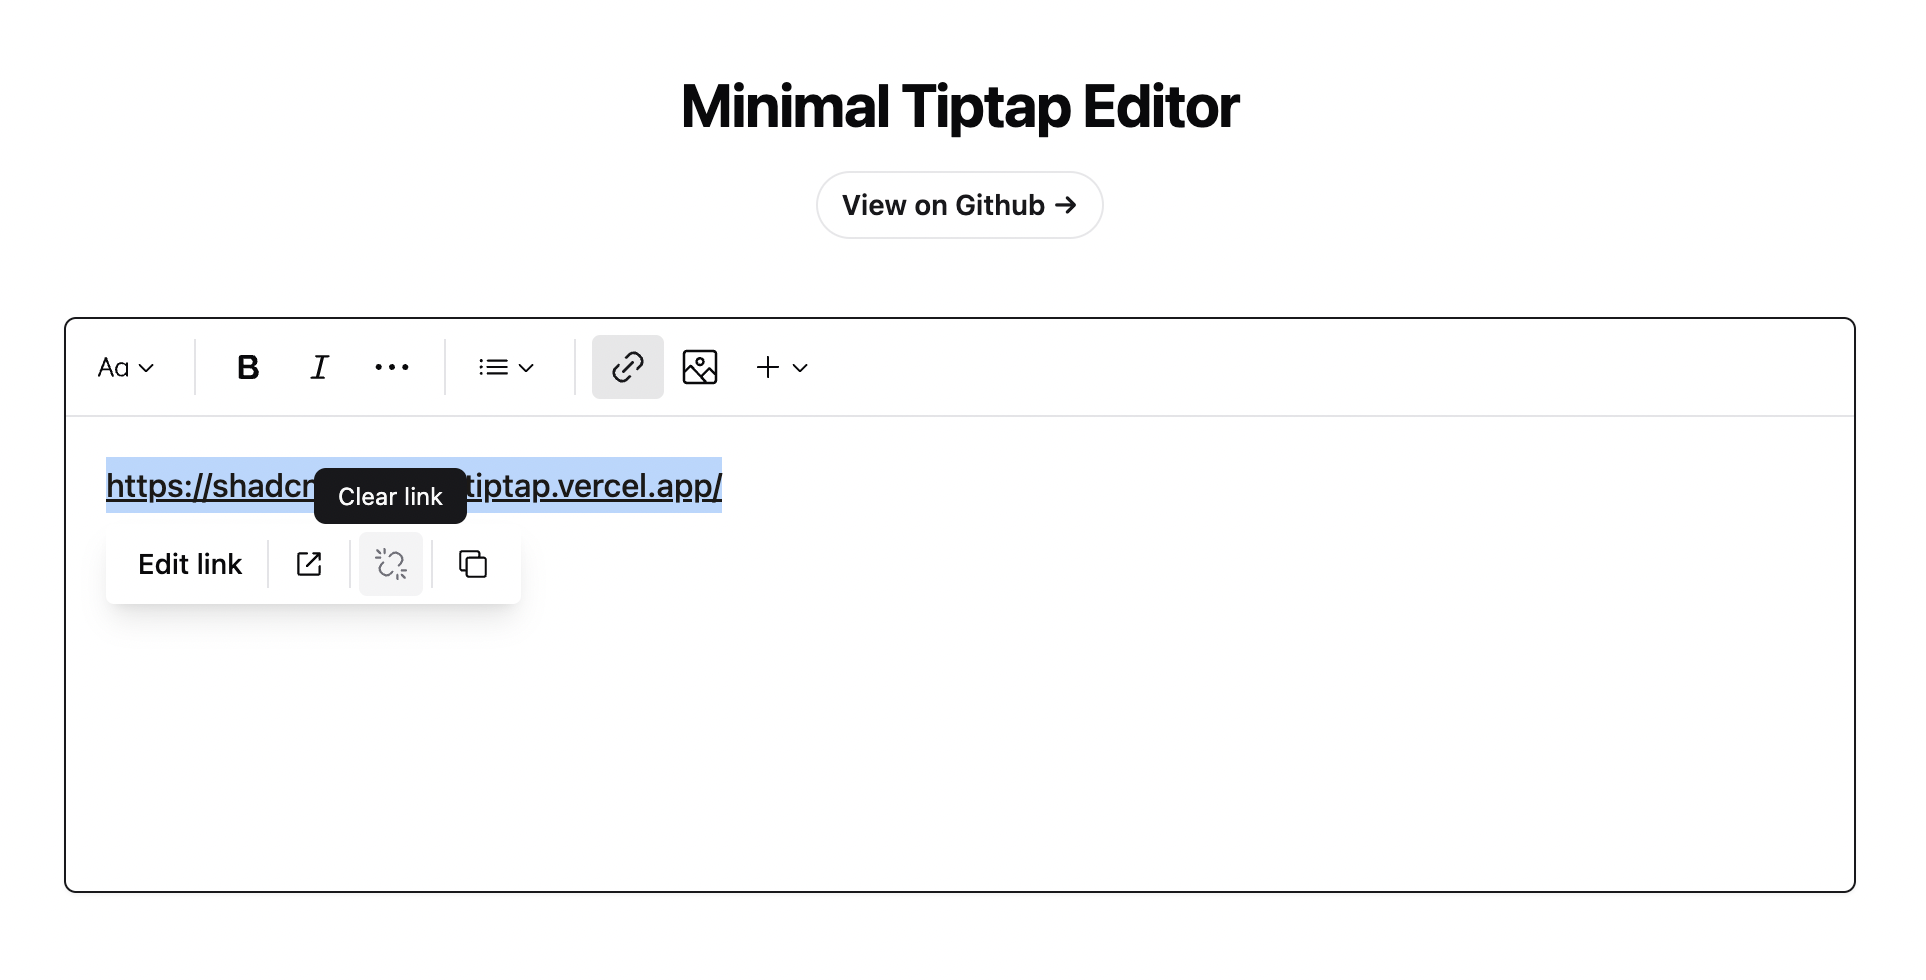 Minimal Tiptap Editor